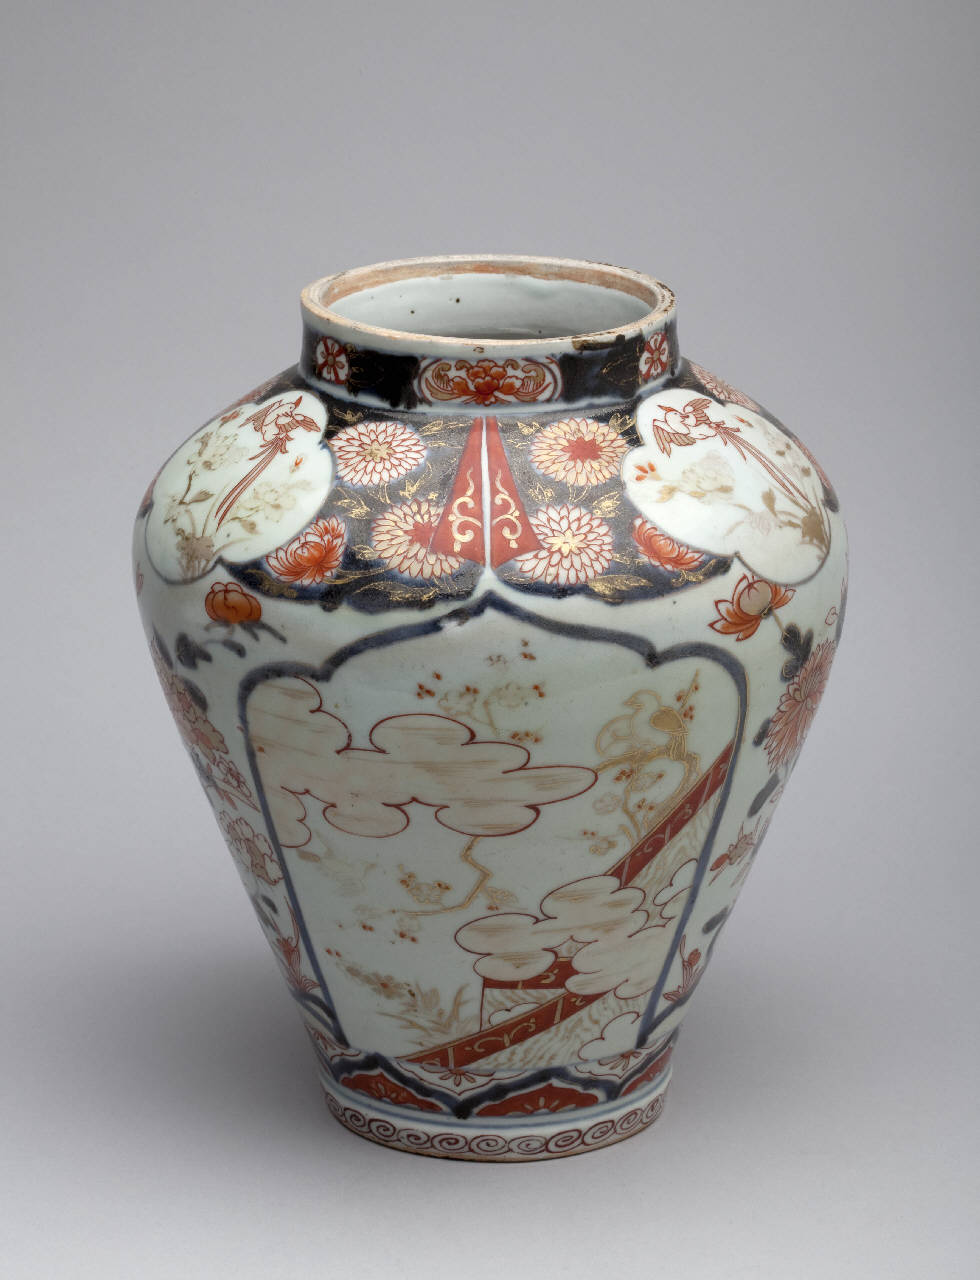 motivi decorativi vegetali, paesaggio (vaso) - manifattura giapponese (secc. XVII/ XVIII)